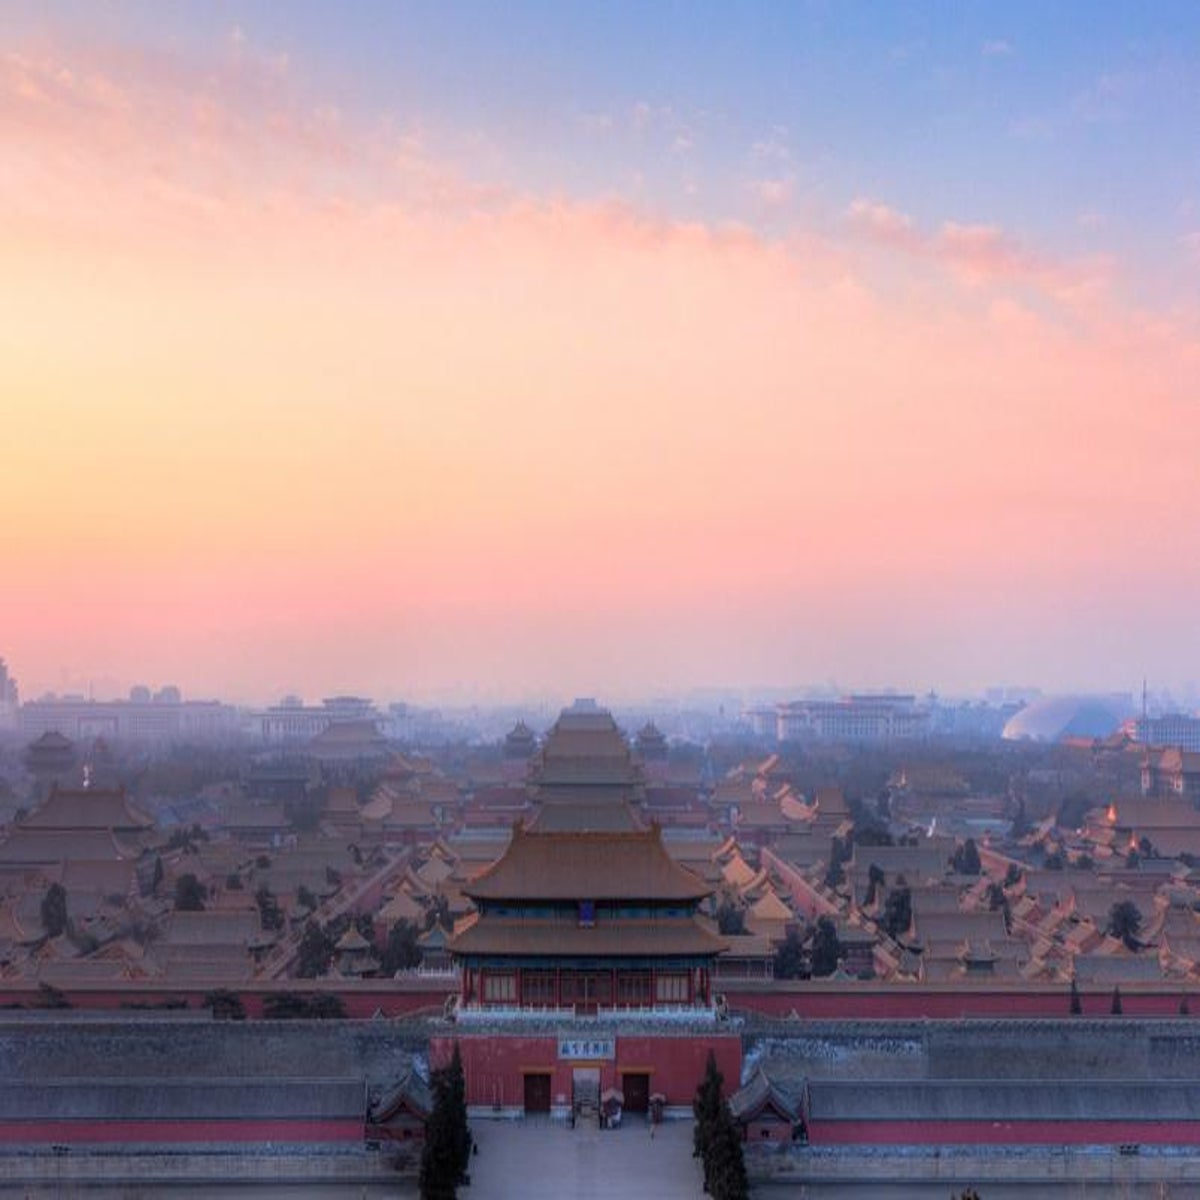 Independent Beijing Forbidden City Photography Tour